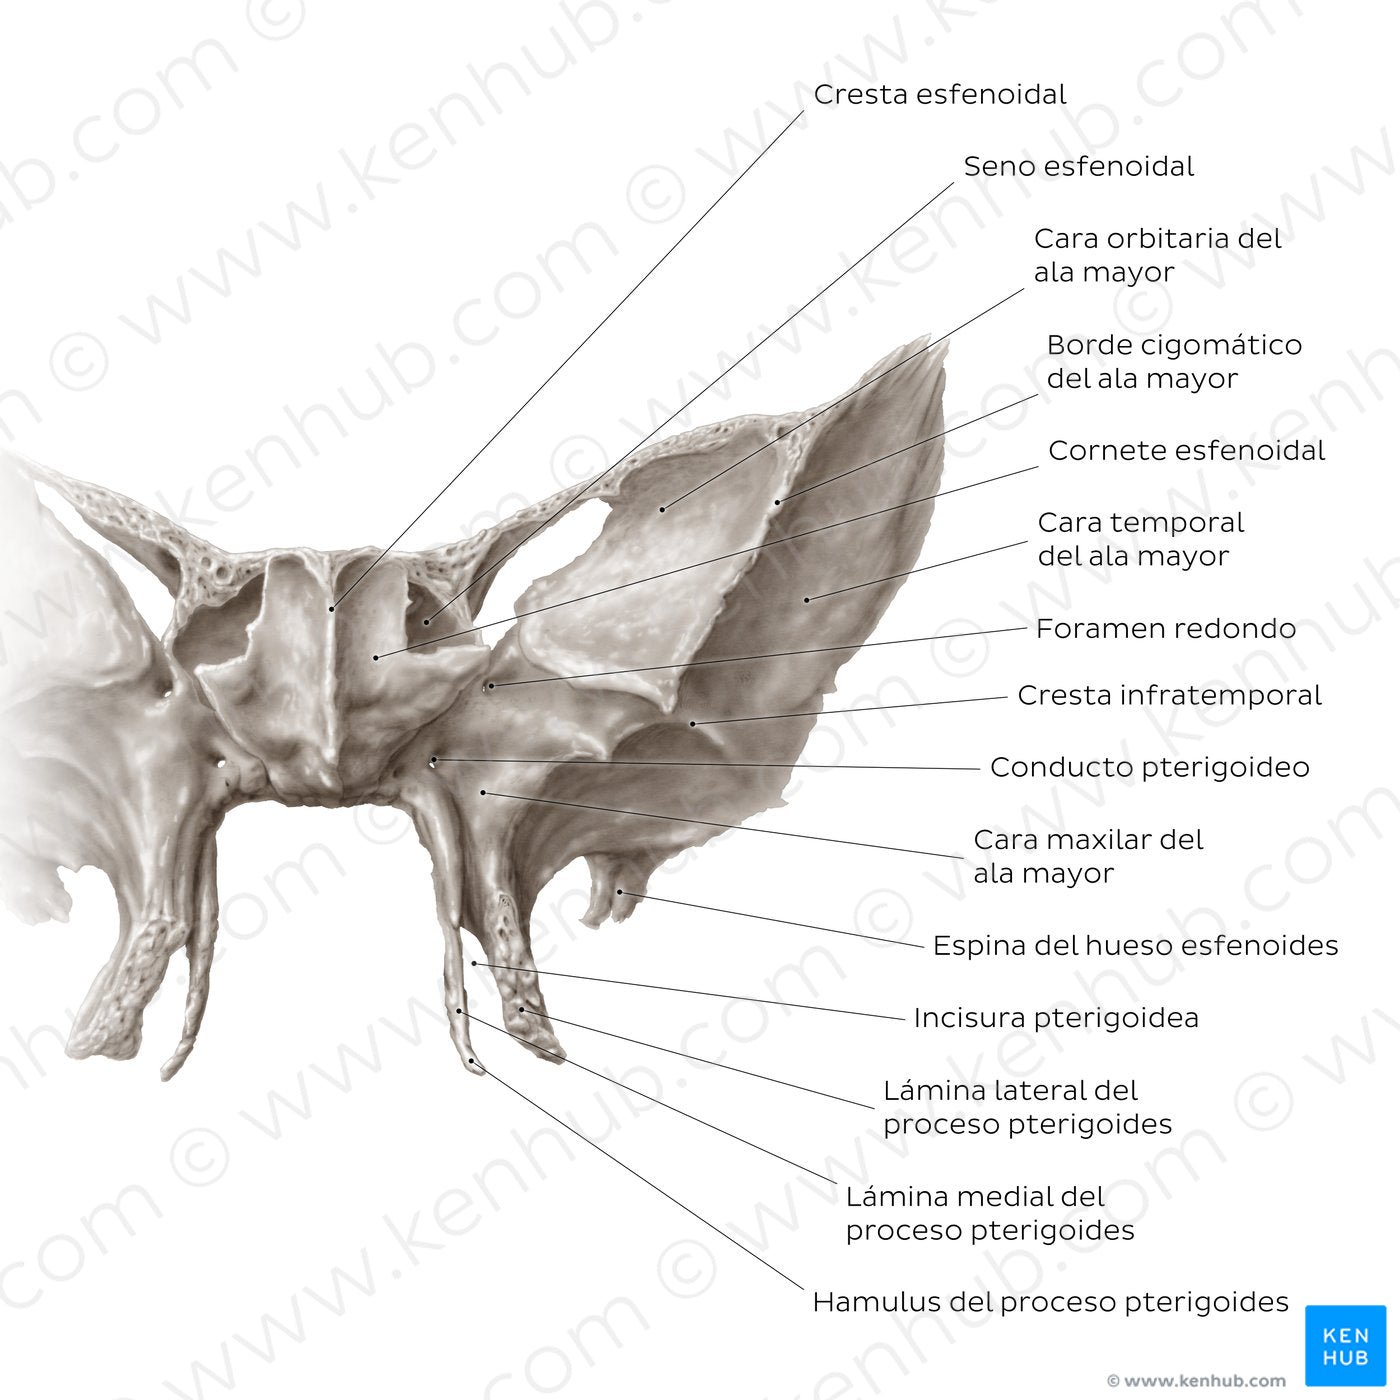 Sphenoid bone (anterior view) (Spanish)